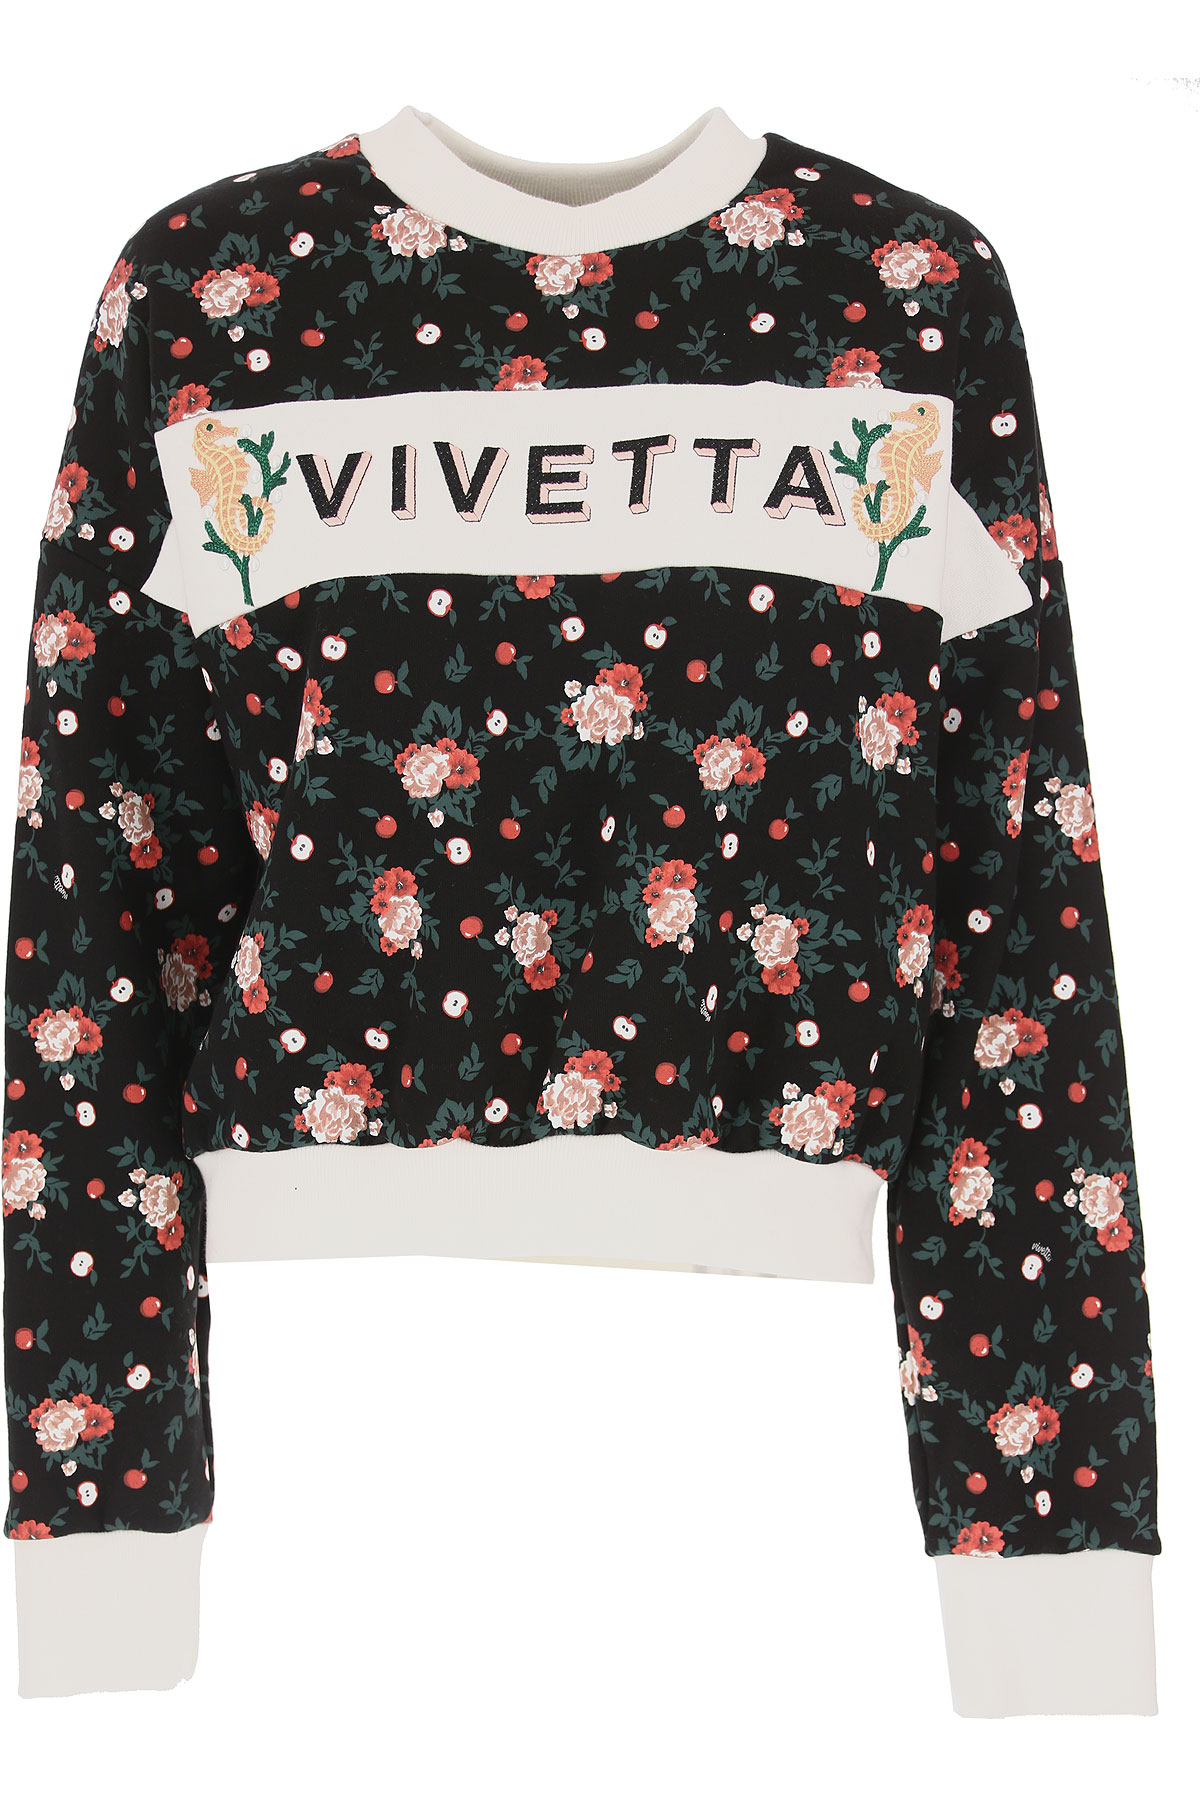 Vivetta Sweatshirt for Women , Noir, Coton, 2017, 38 40